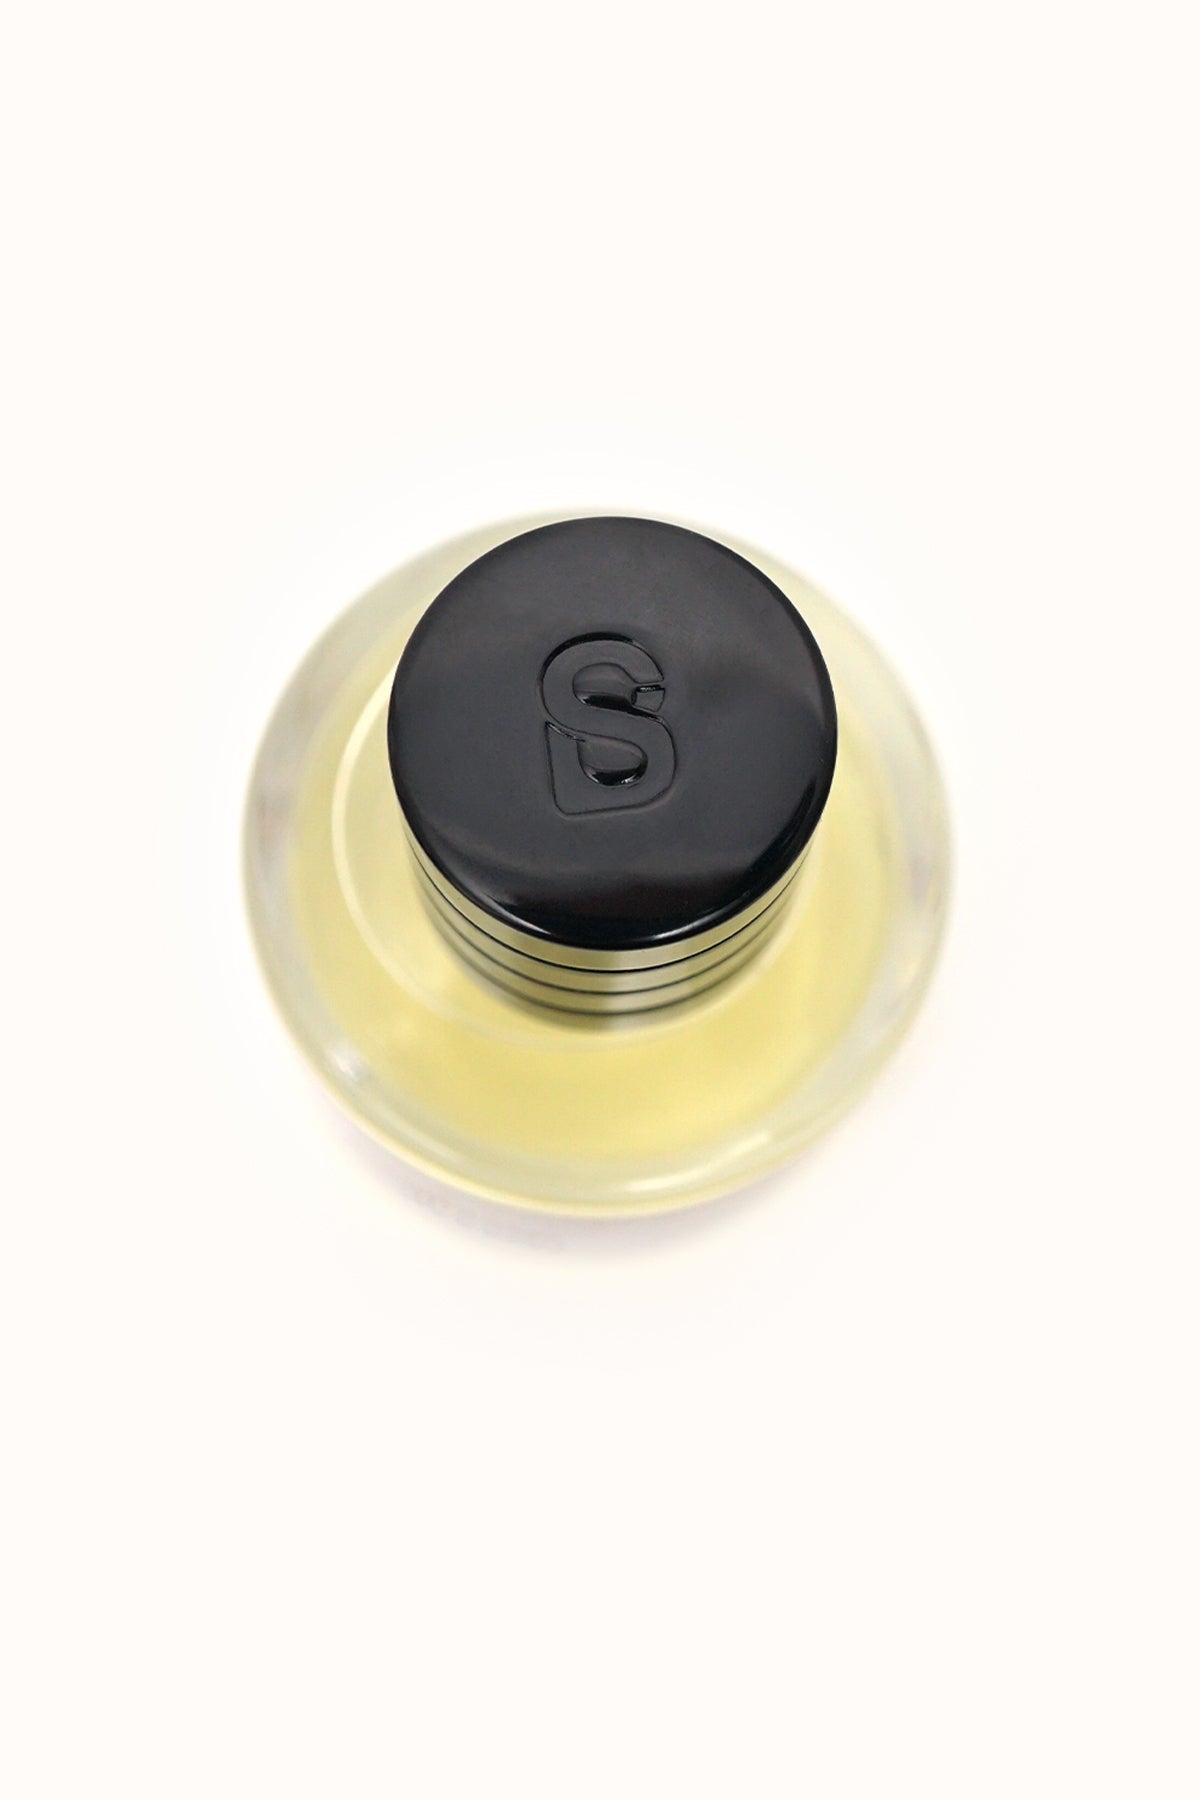 BSB - Colmar Eau De Perfume